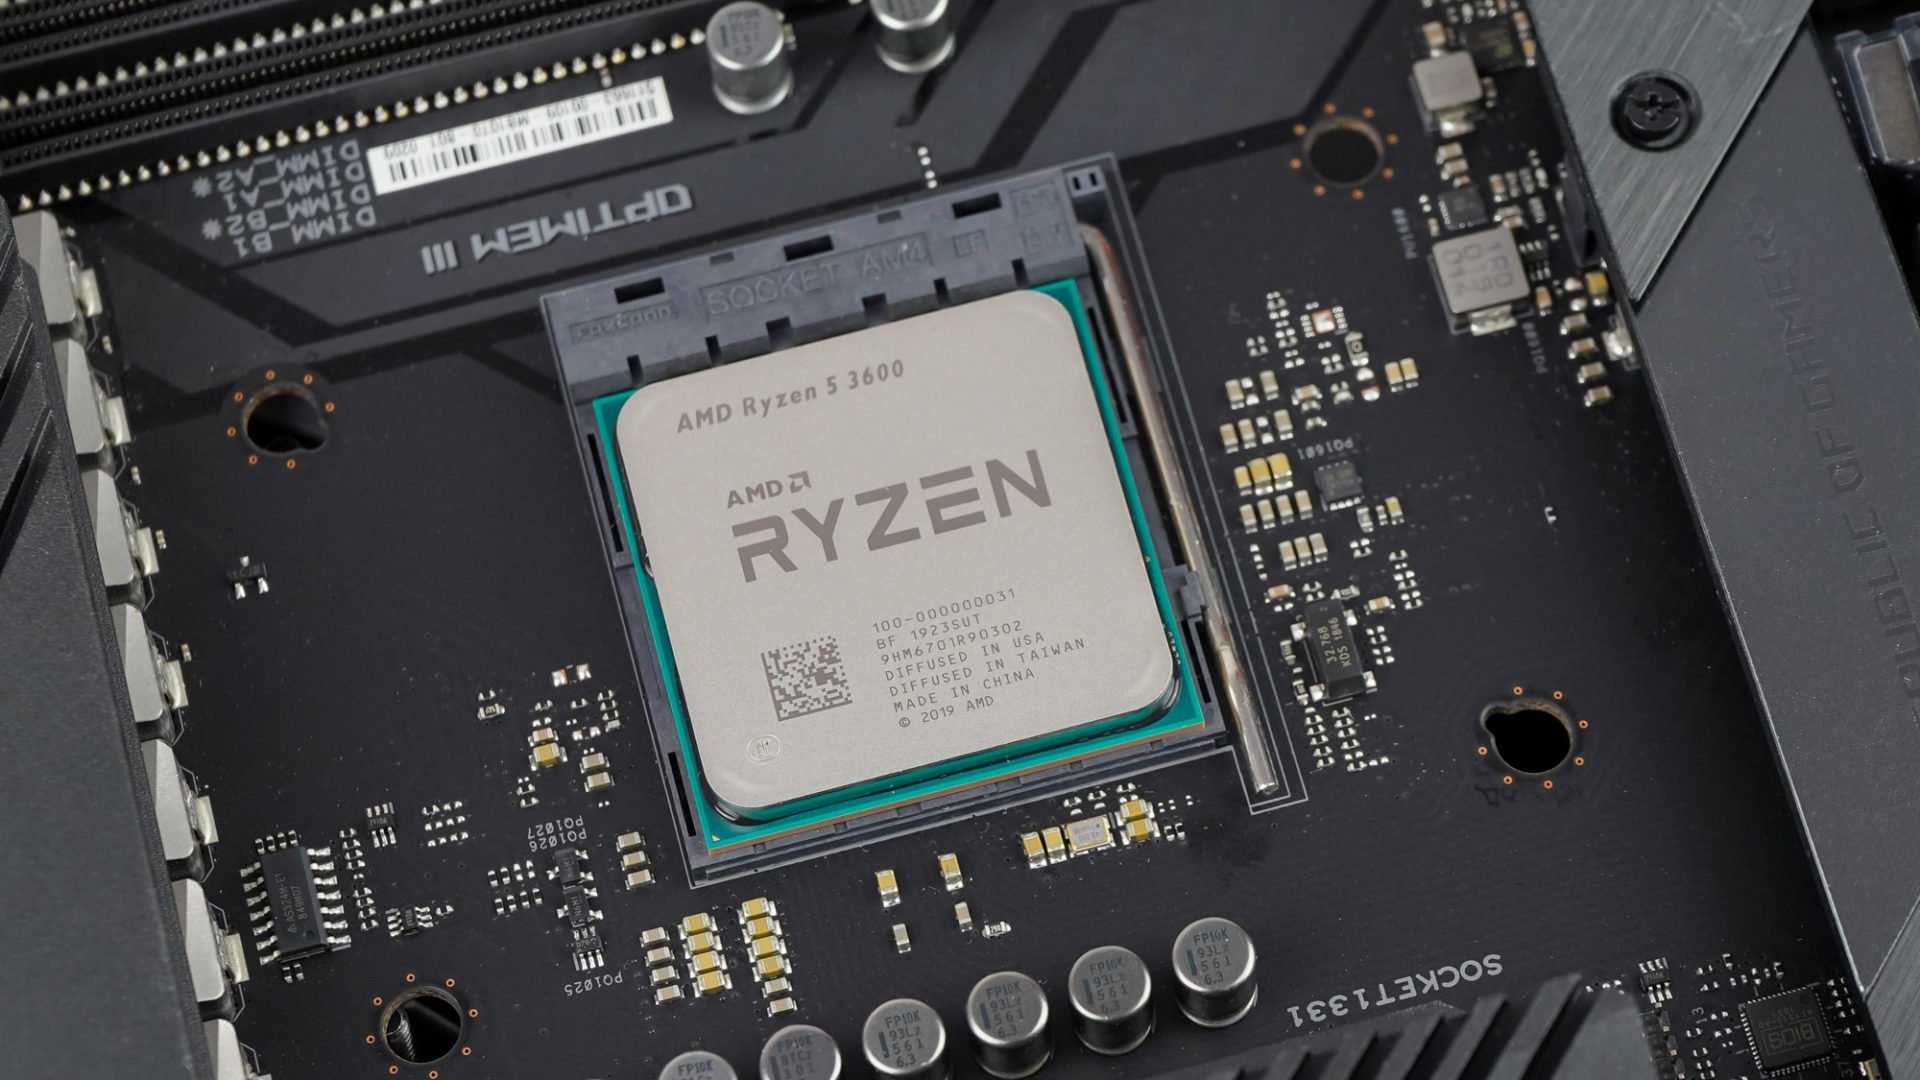 Ryzen 5 3600g. AMD Ryzen 5 3600. AMD Ryzen 5 3600 Socket am4. Ryzen 5 3500. Ryzen 7 4800hs.